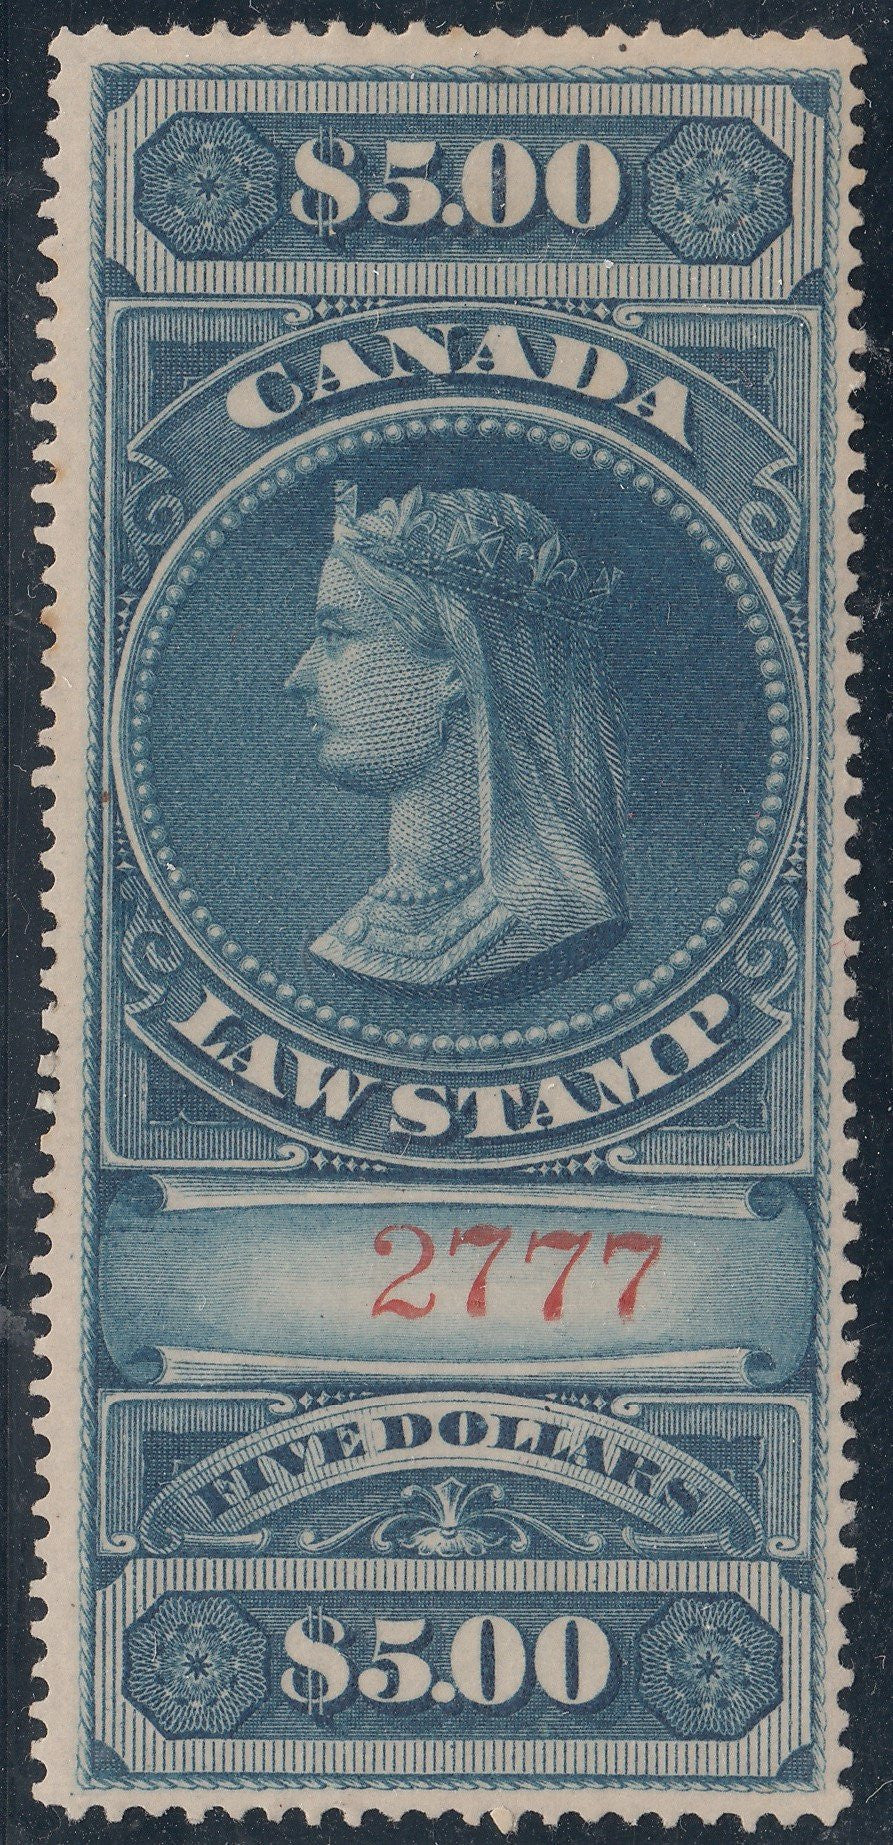 0006SC1707 - FSC 6 - Mint - Deveney Stamps Ltd. Canadian Stamps